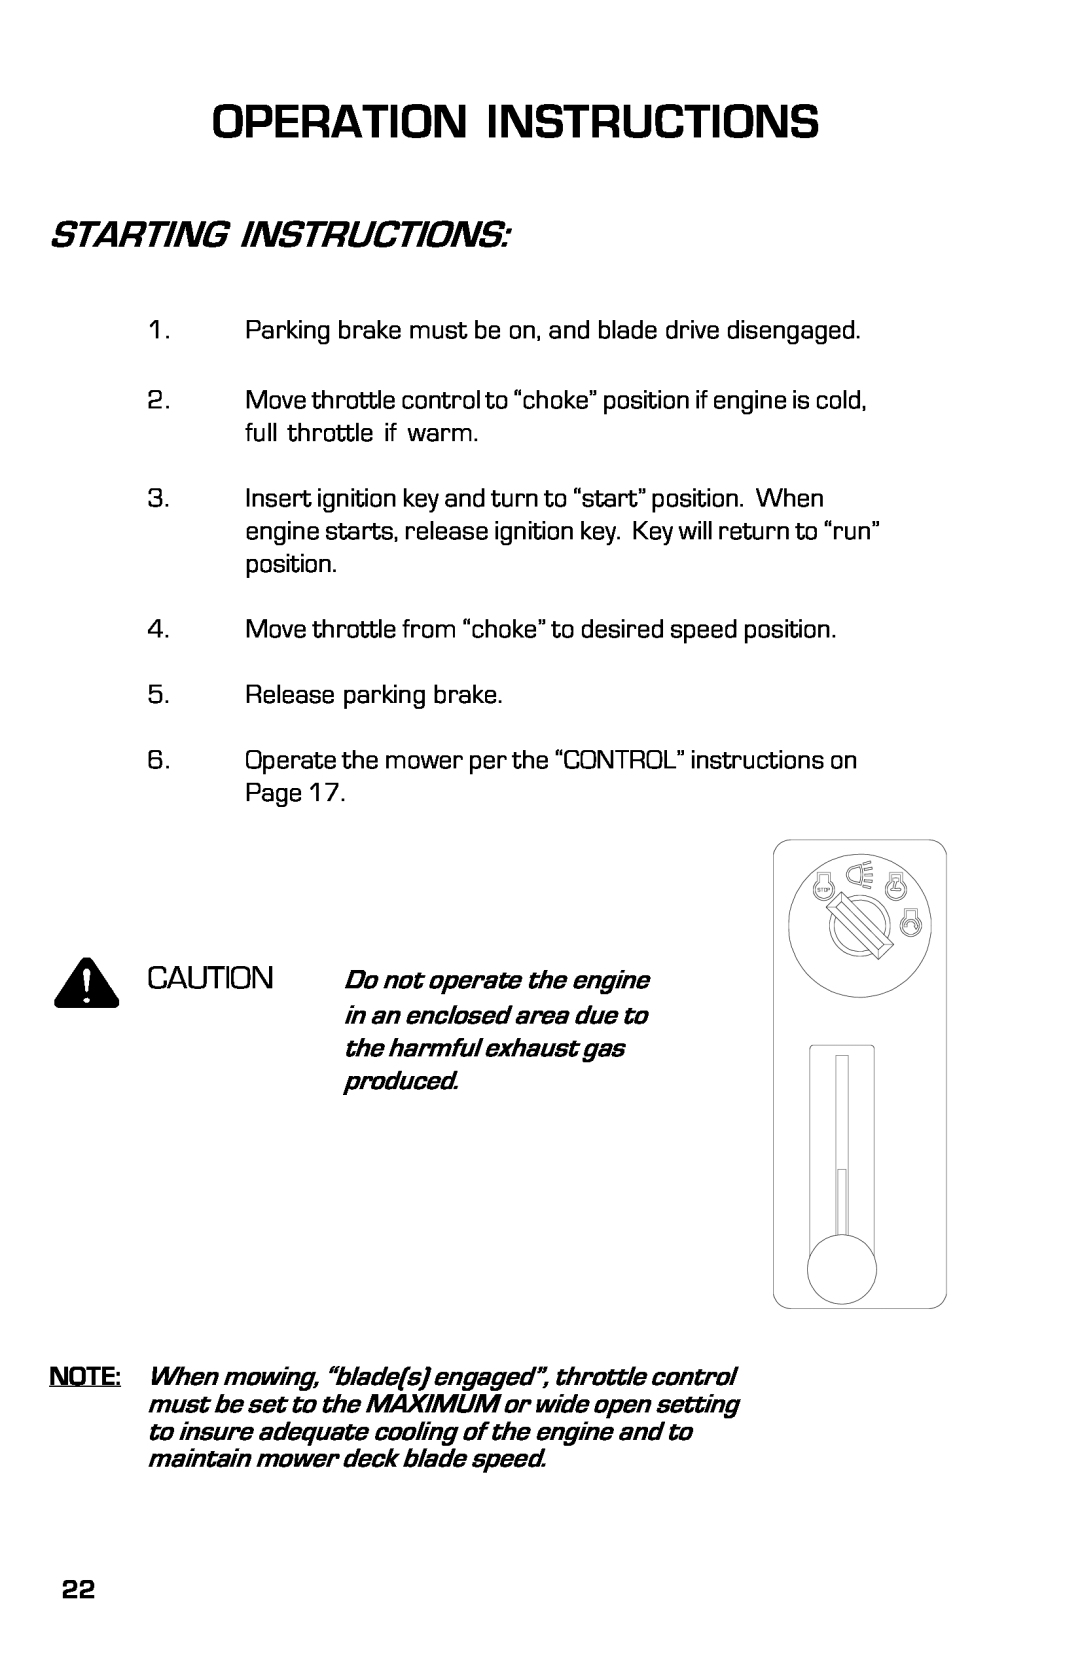 Dixon 2004 manual Starting Instructions, Operation Instructions 